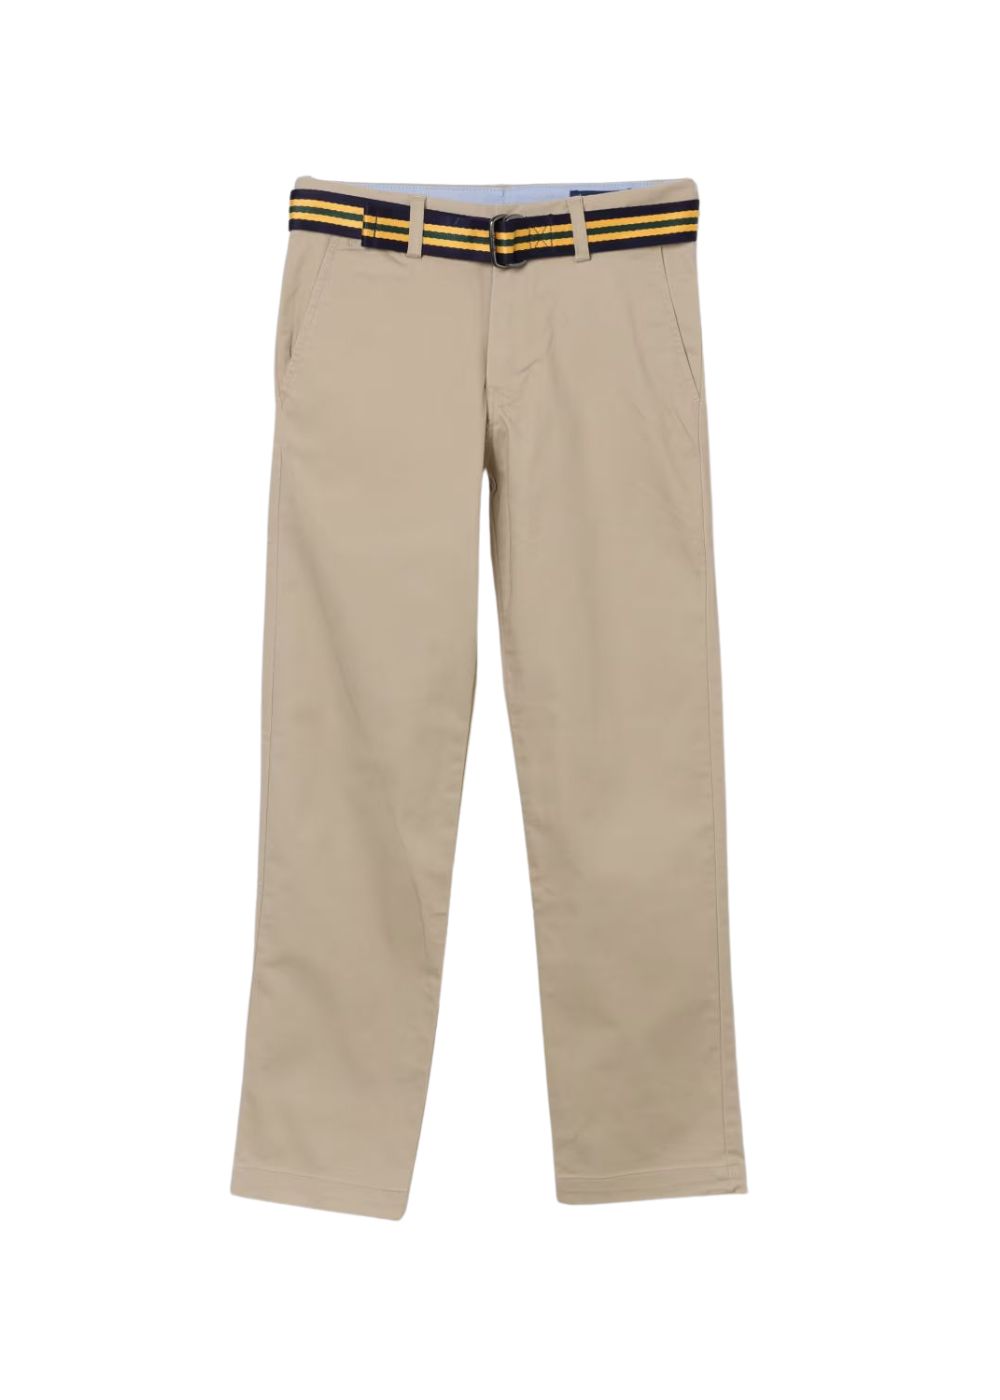 Featured image for “Polo Ralph Lauren Pantaloni Beige”